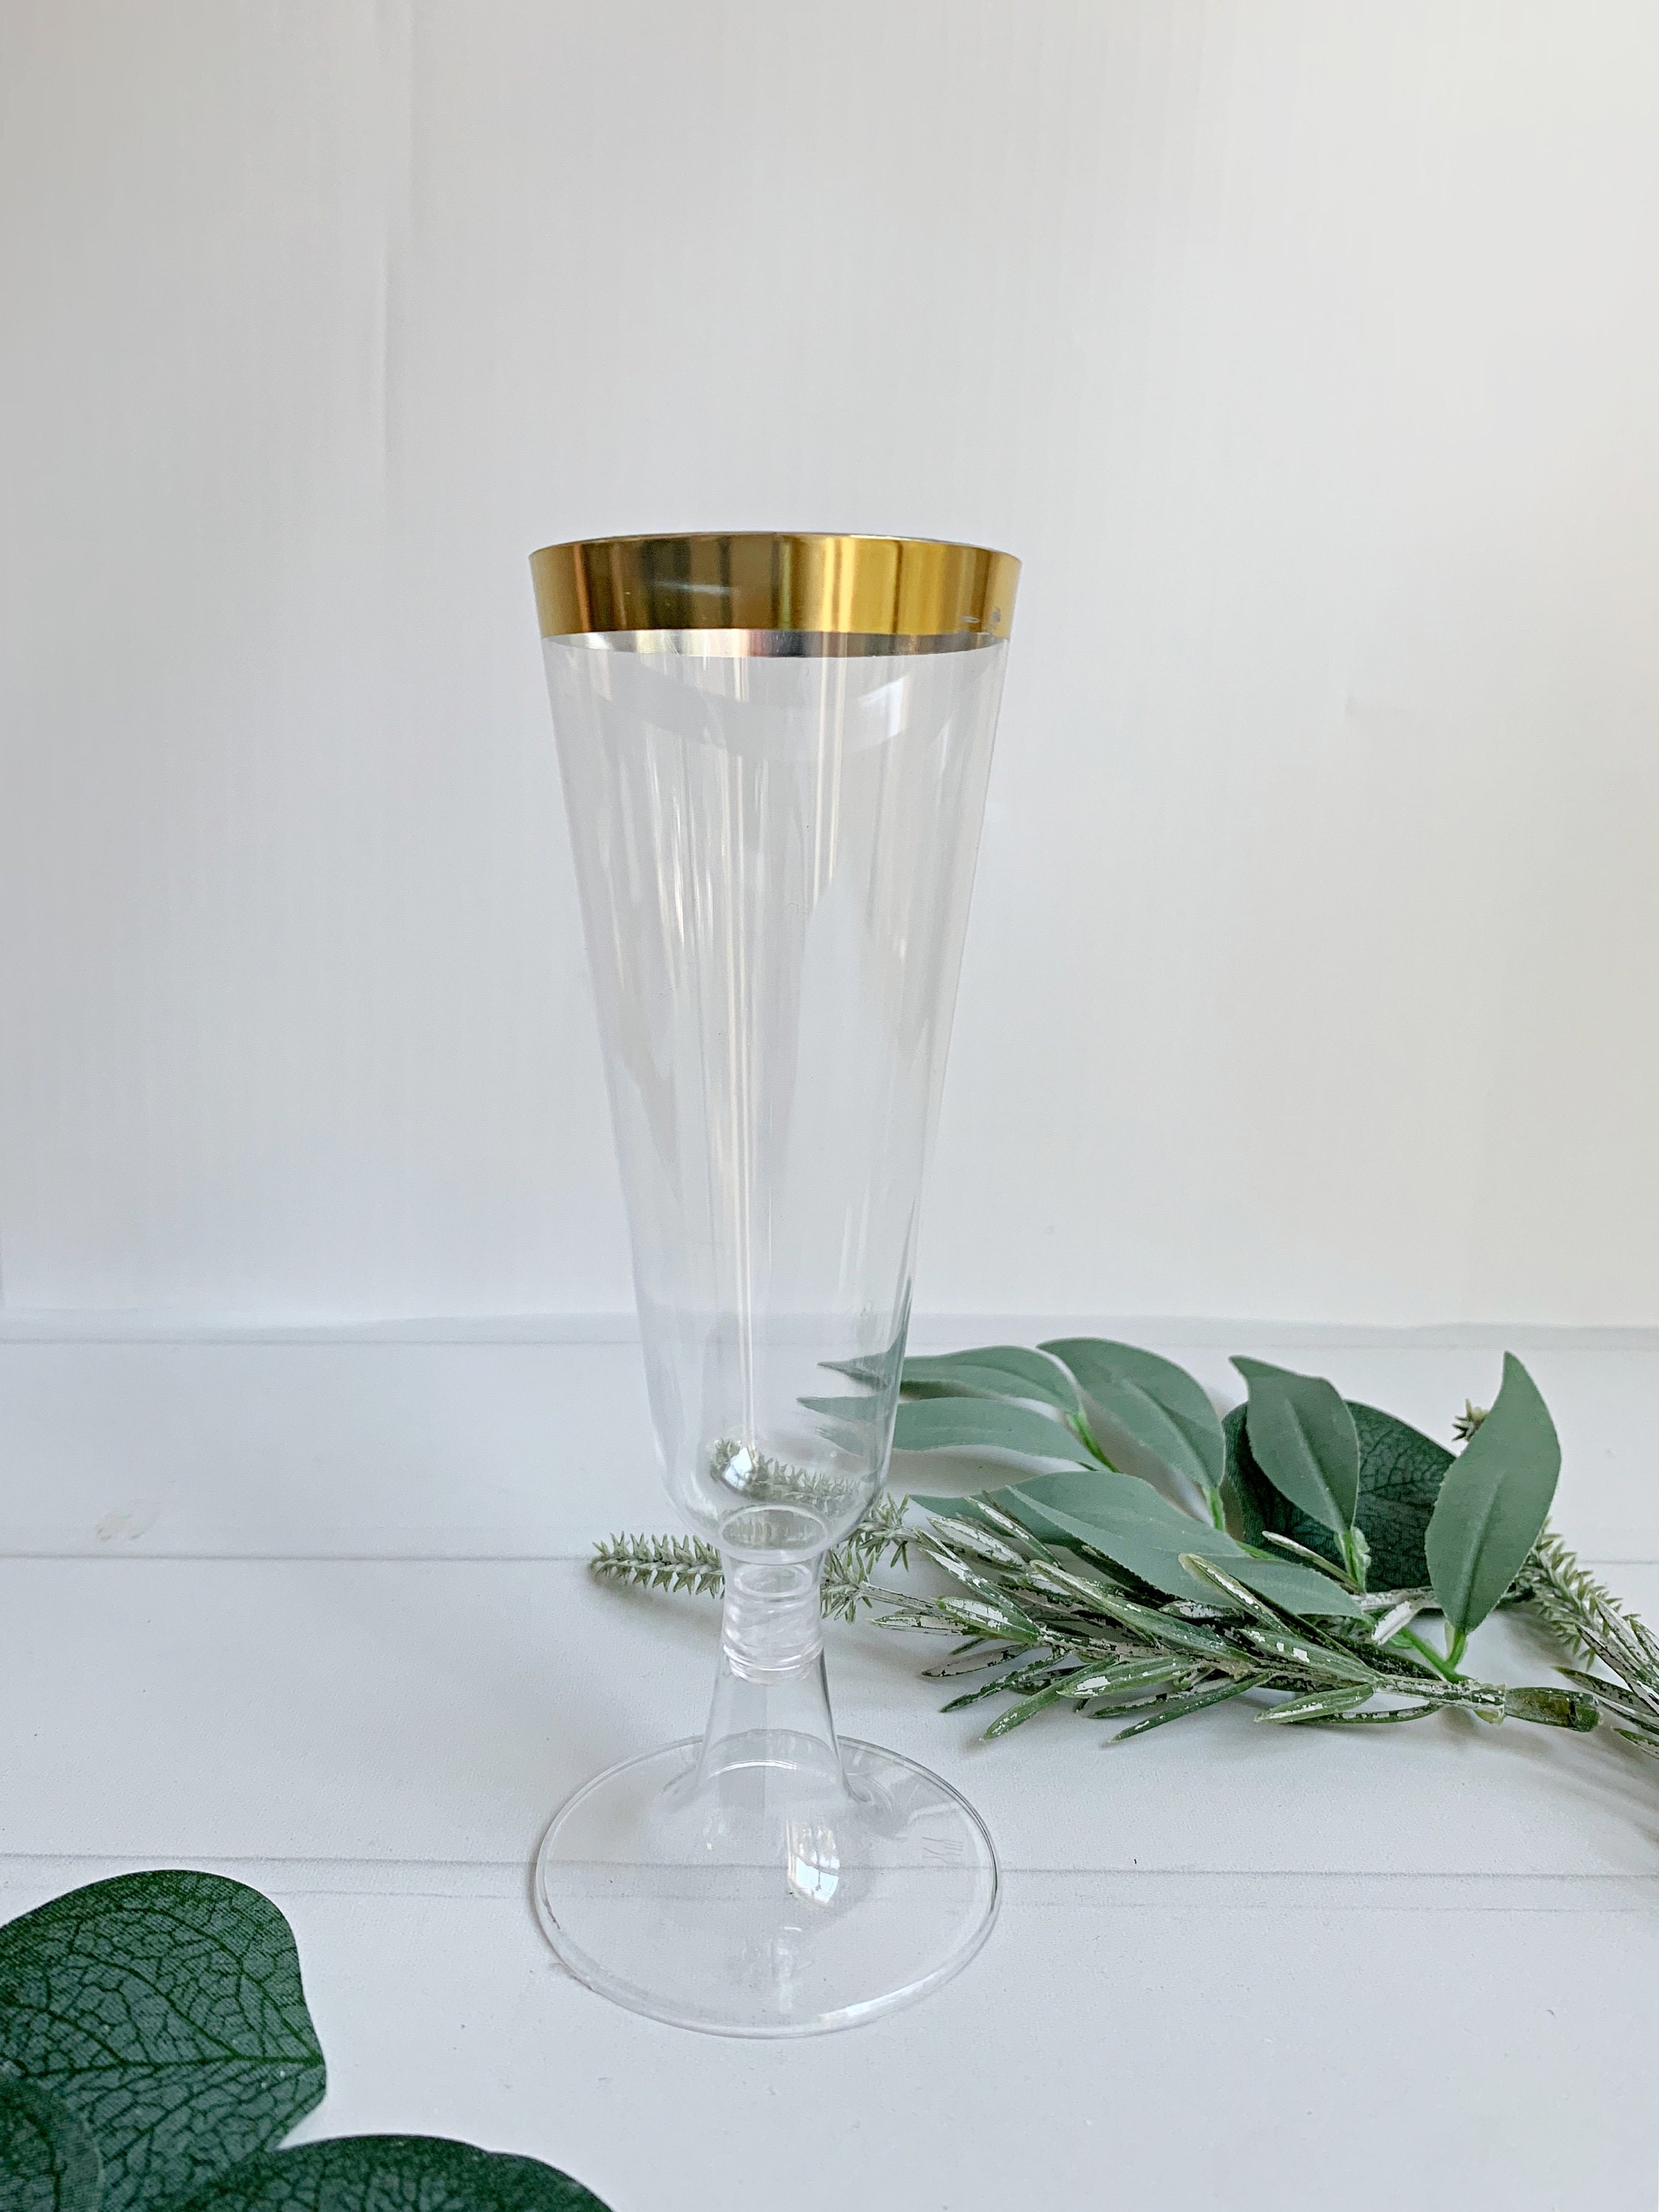 Plastic Champagne Flutes, Stemless Disposable Golden Rim Tasting